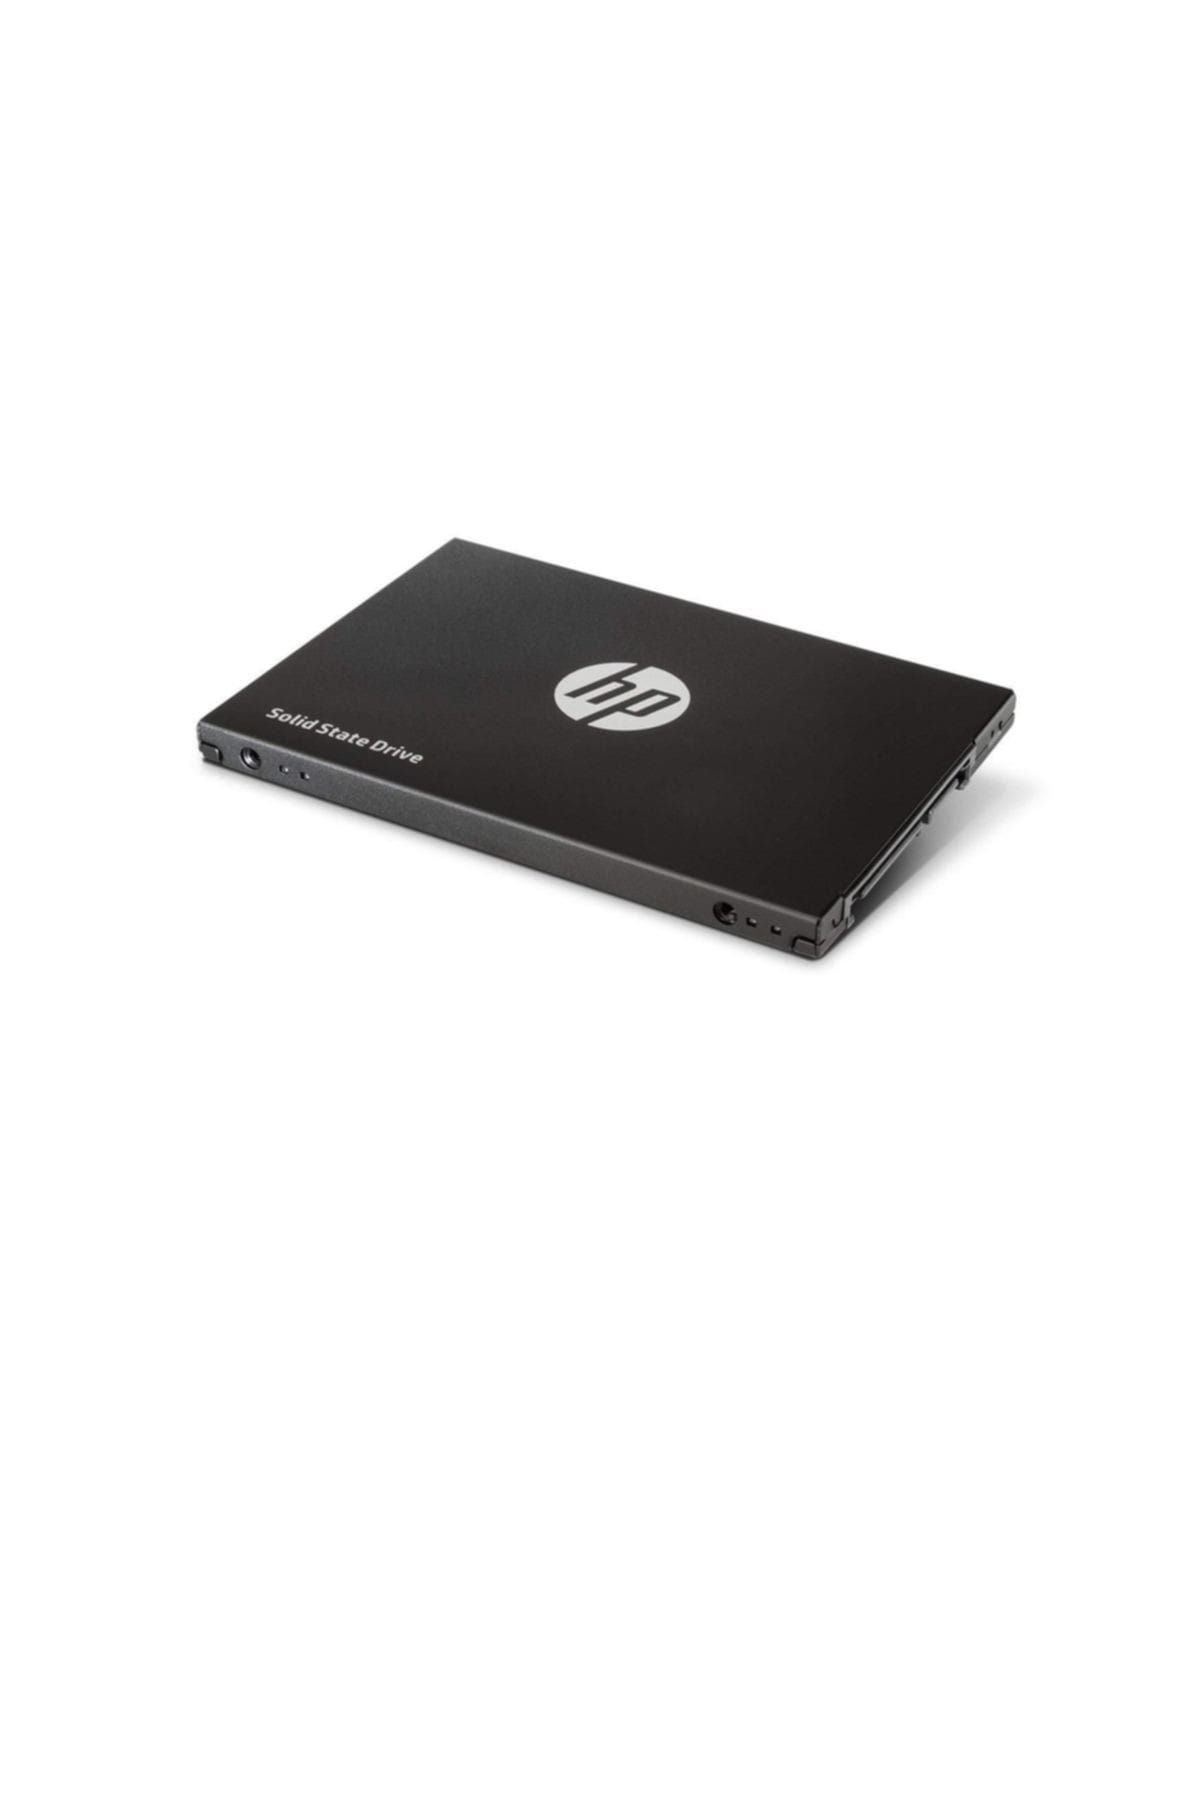 HP 120Gb S600 2.5" Sata Iıı Ssd 4Fz32Aa 520-500Mb Hp S600 2.5" 120Gb Sata Iıı 3D Nand Internal Solid